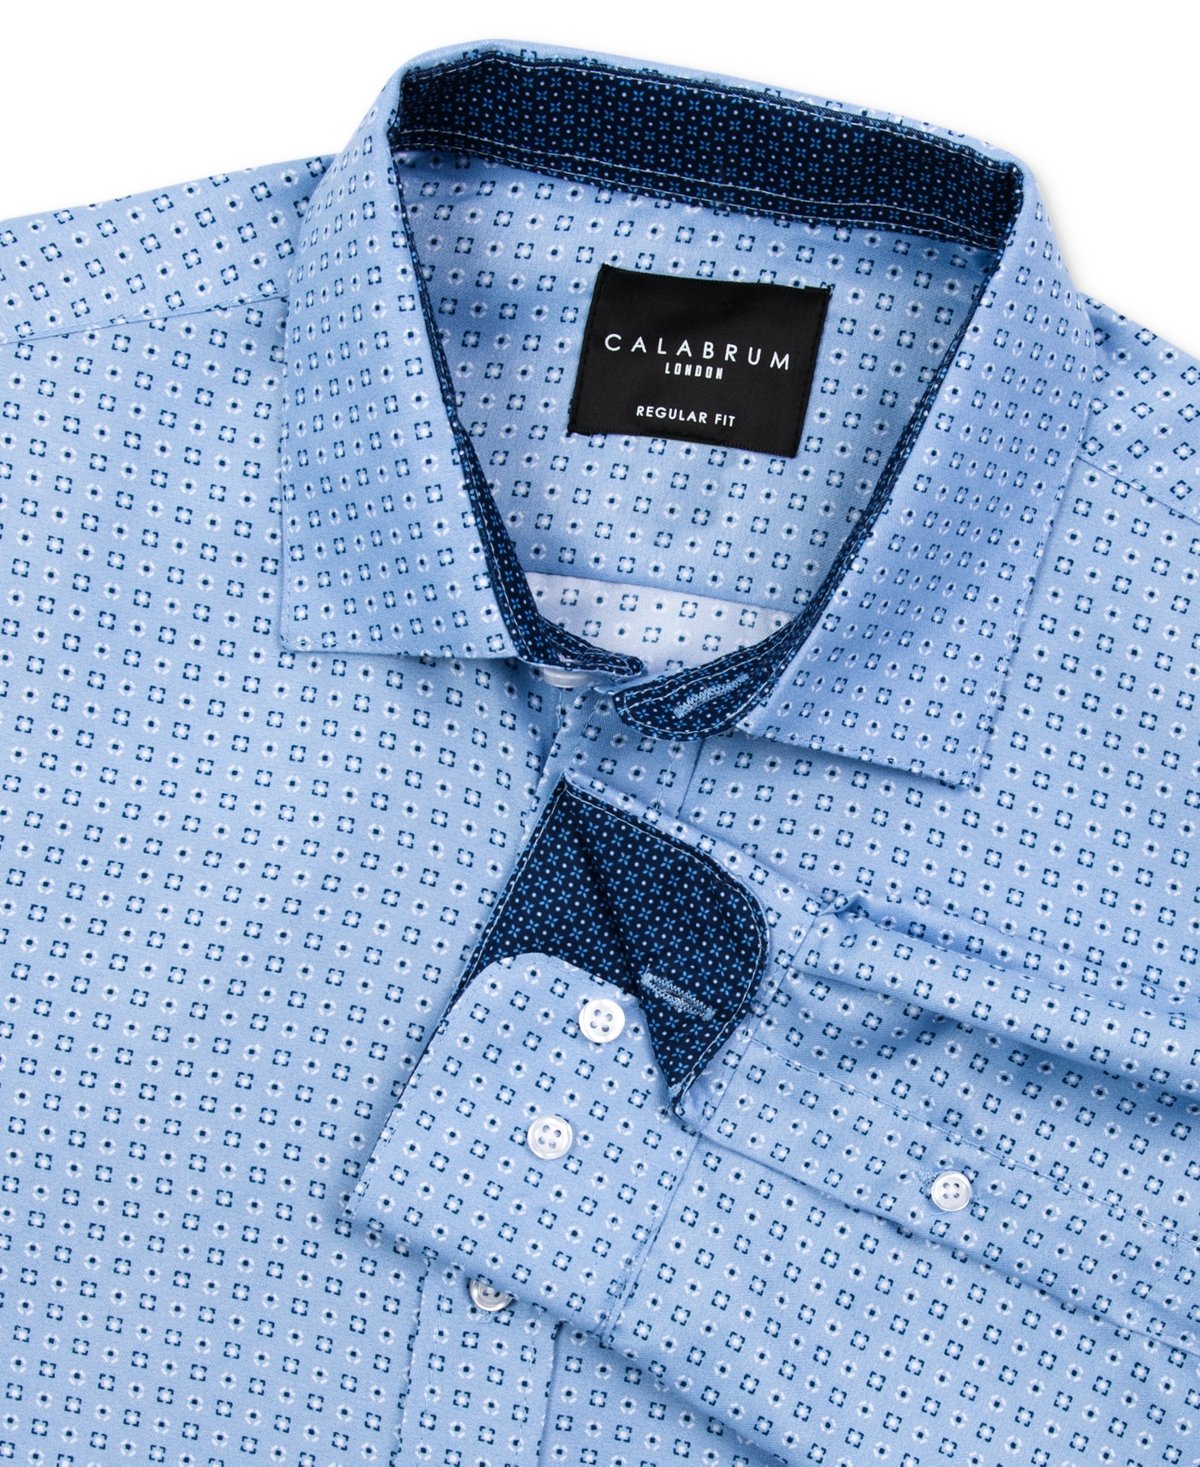 Calabrum Men's Regular Fit Micro Geo Print Wrinkle Free Performance Dress Shirt In Light Blue